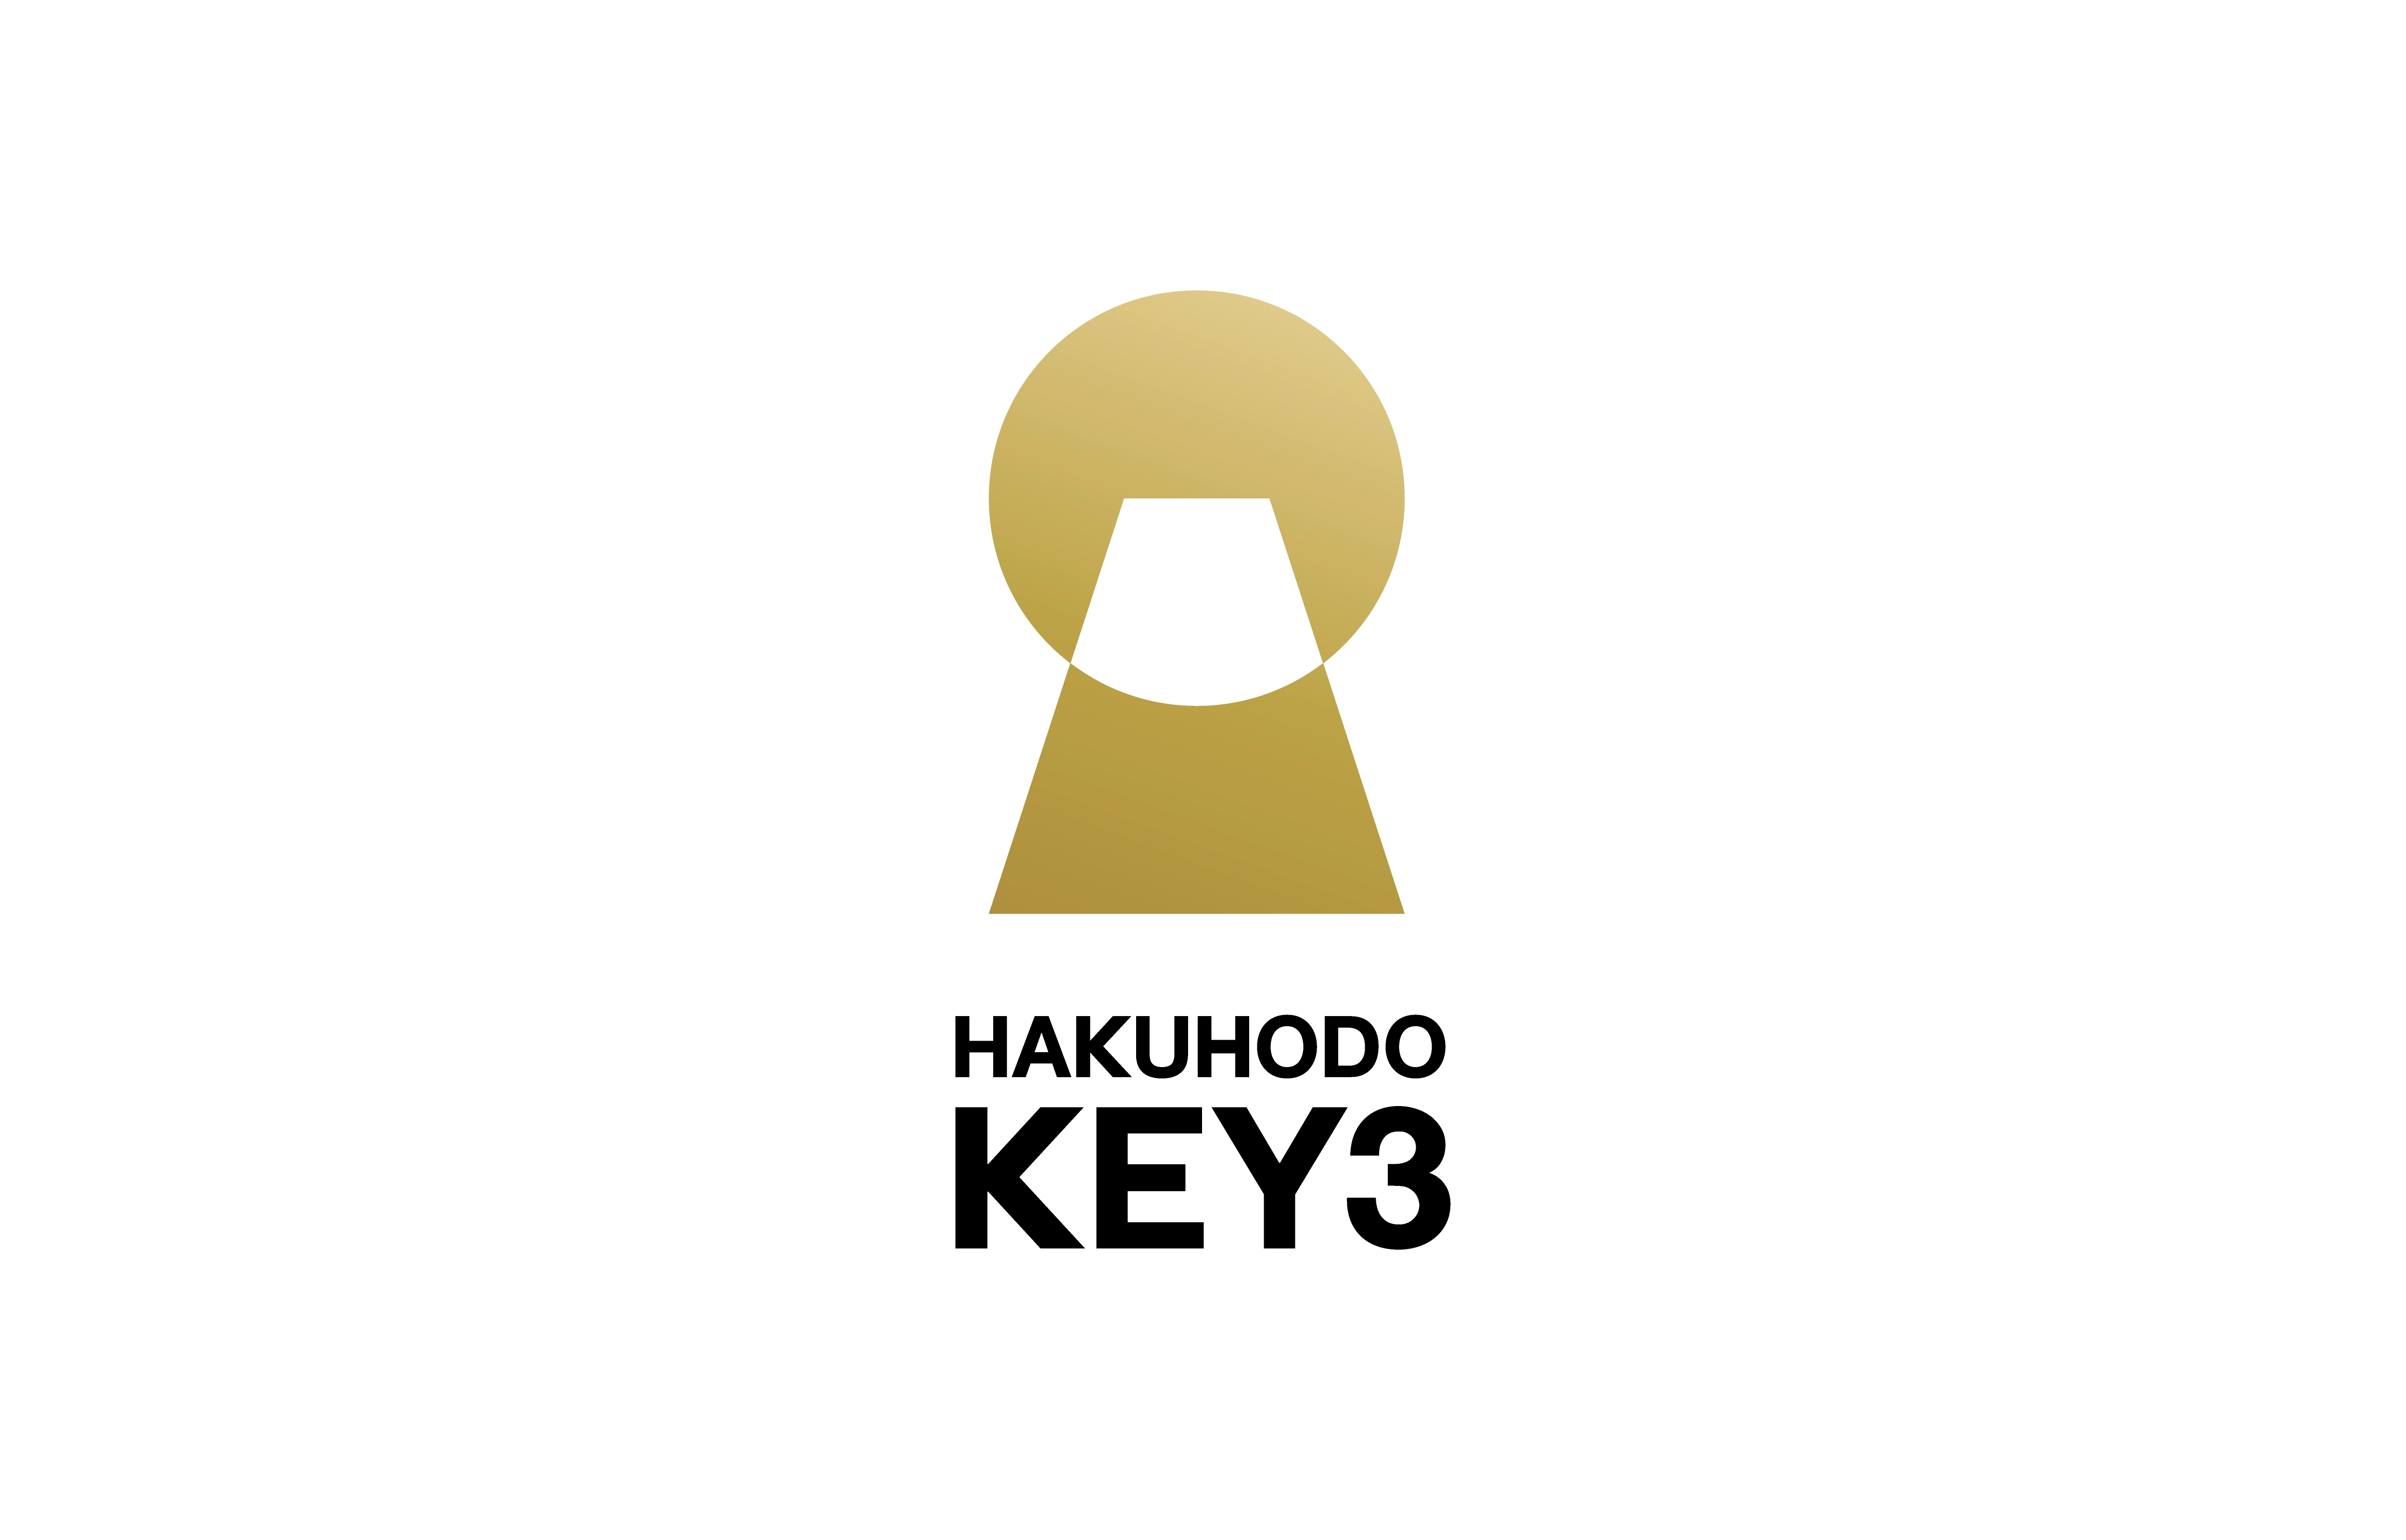 HAKUHODO KEY3